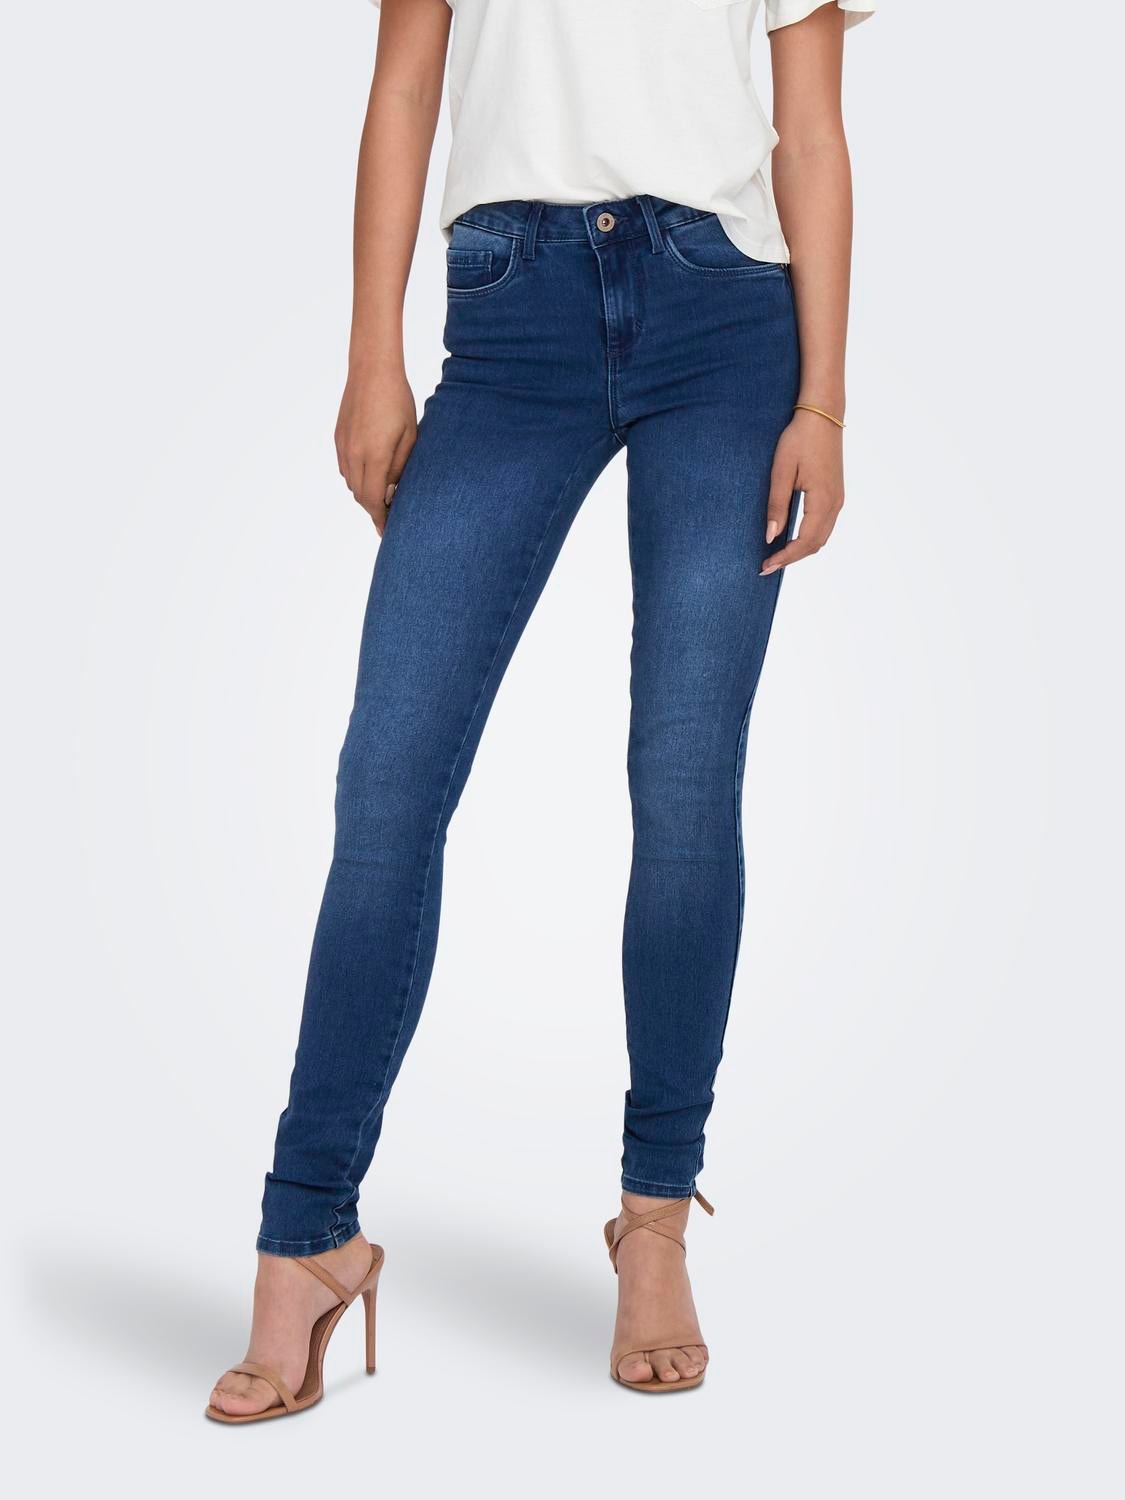 945 Dependiente Refinamiento ONLRoyal regular Jeans skinny fit | Azul intermedio | ONLY®